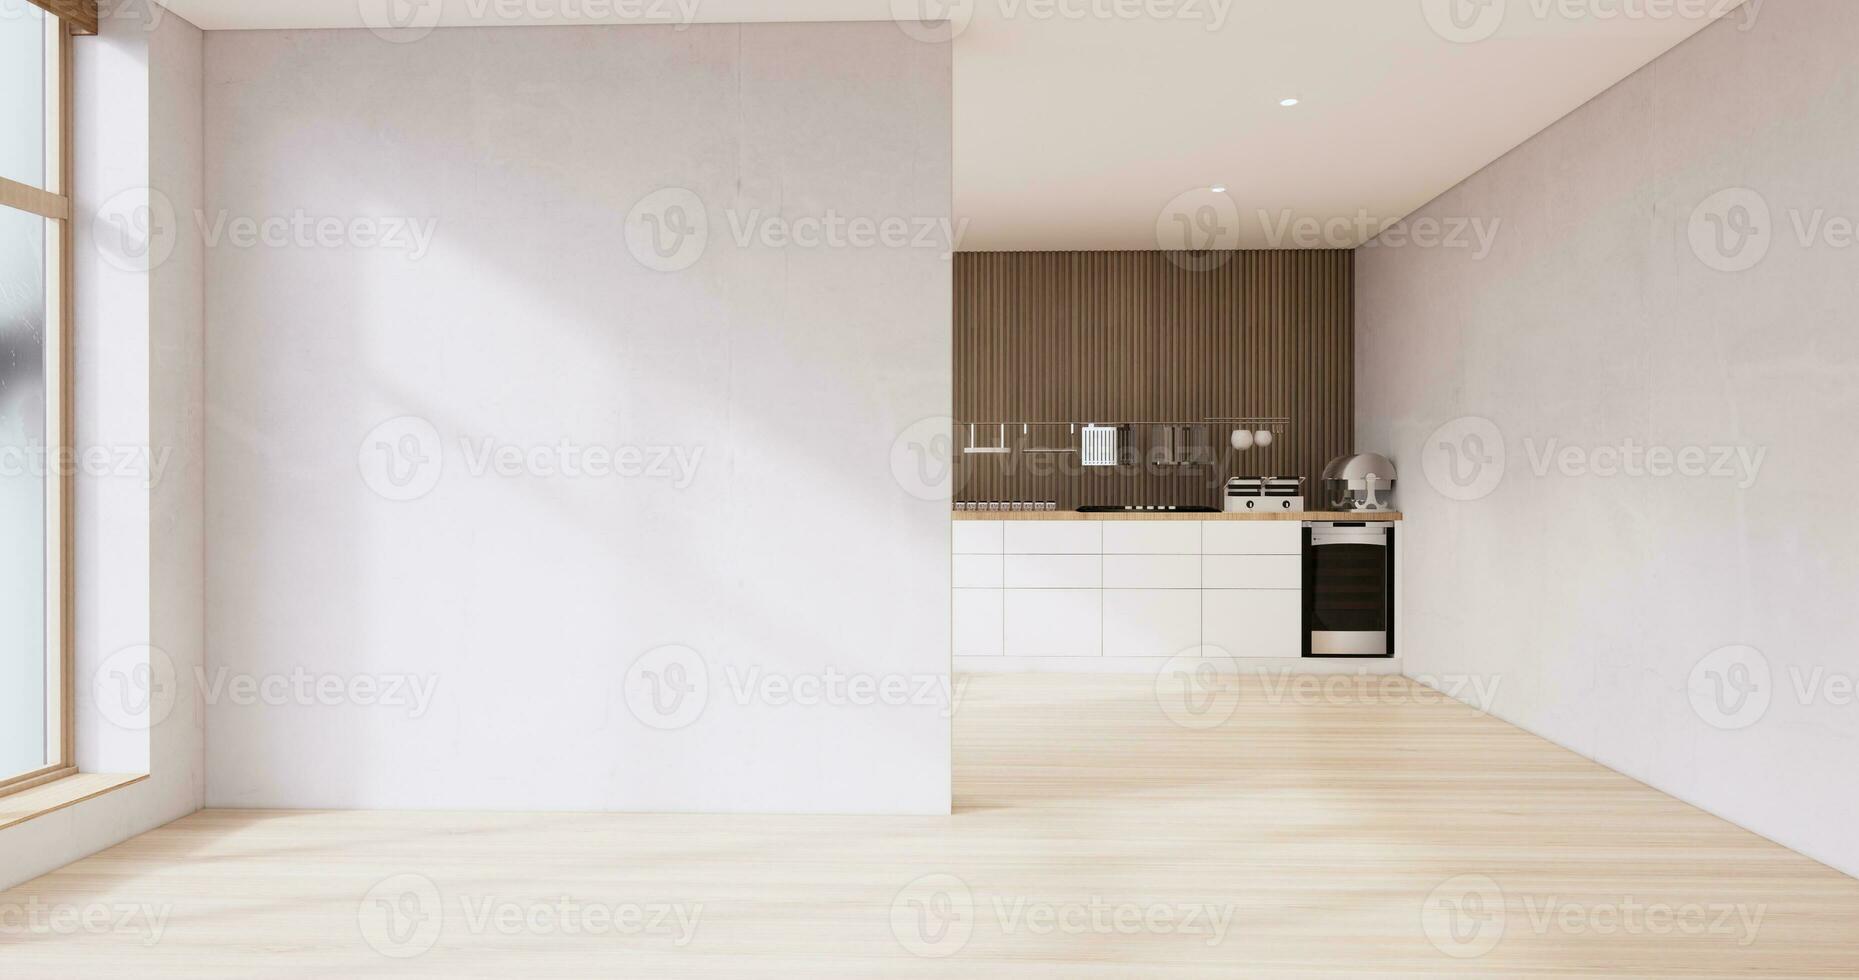 bespotten omhoog keuken kamer Japans stijl, wit muur bespotten omhoog. foto